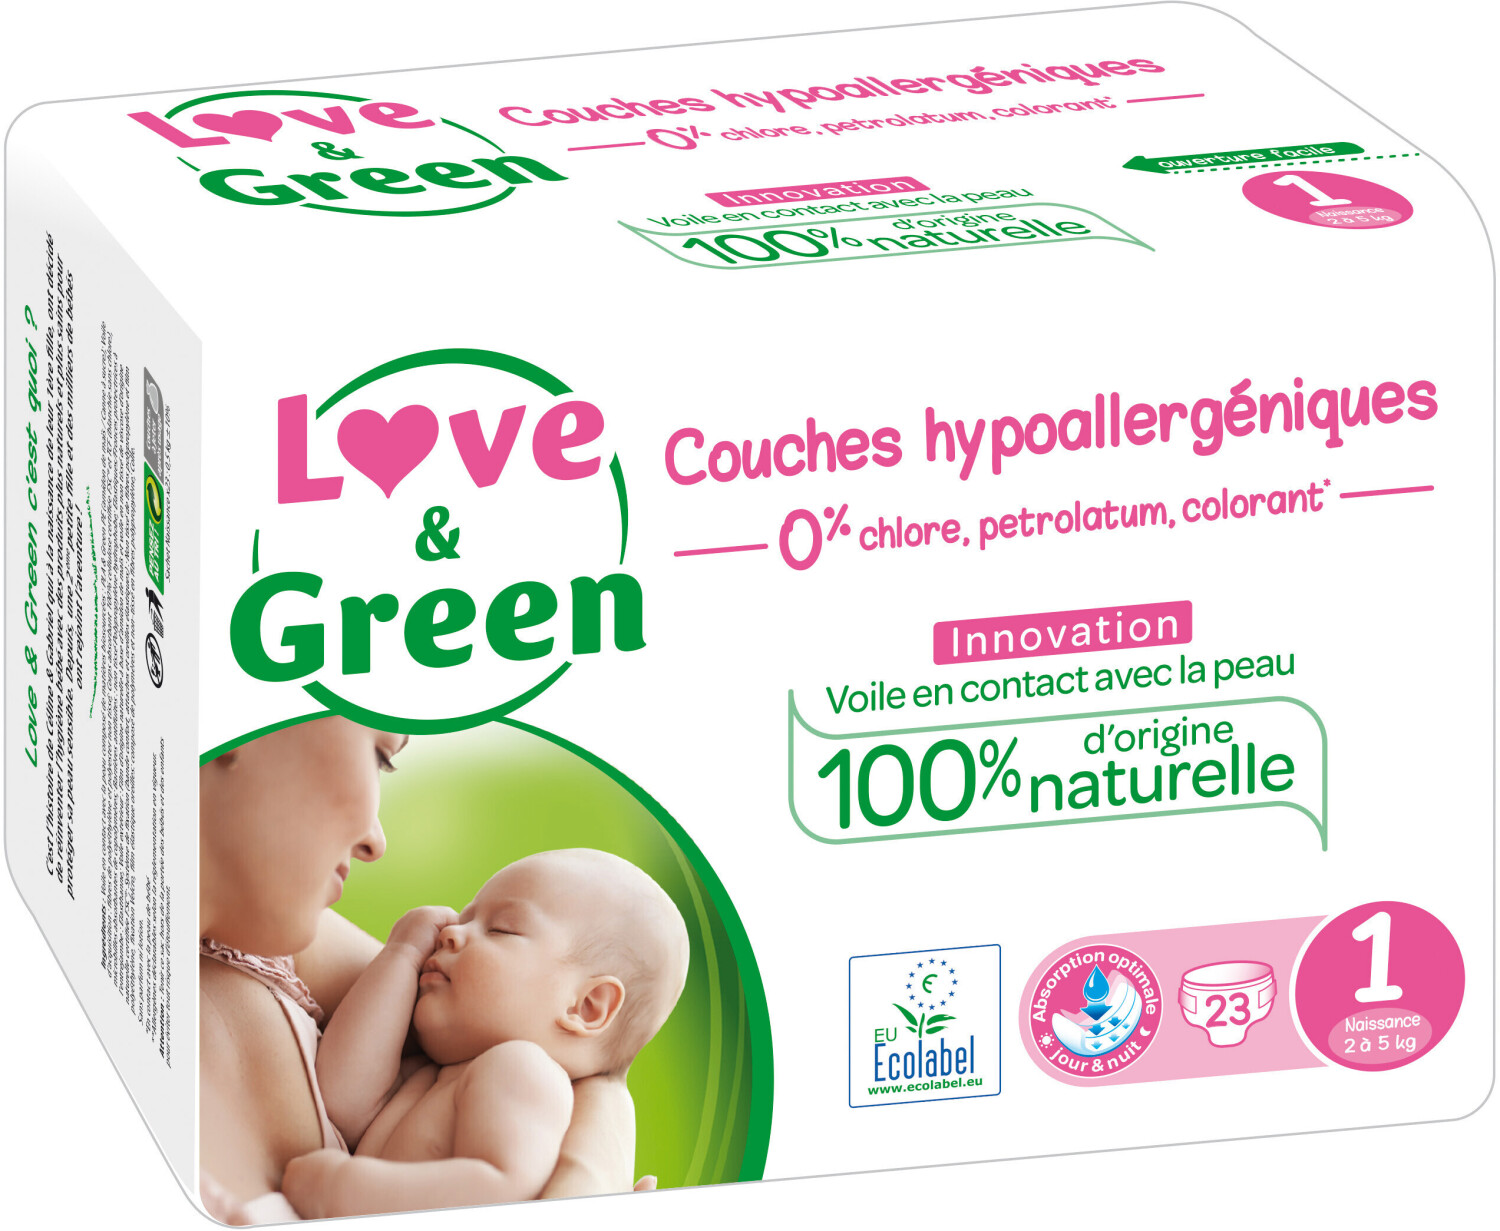 Love & Green Couches hypoallergéniques taille 1 (2-5 kg) au